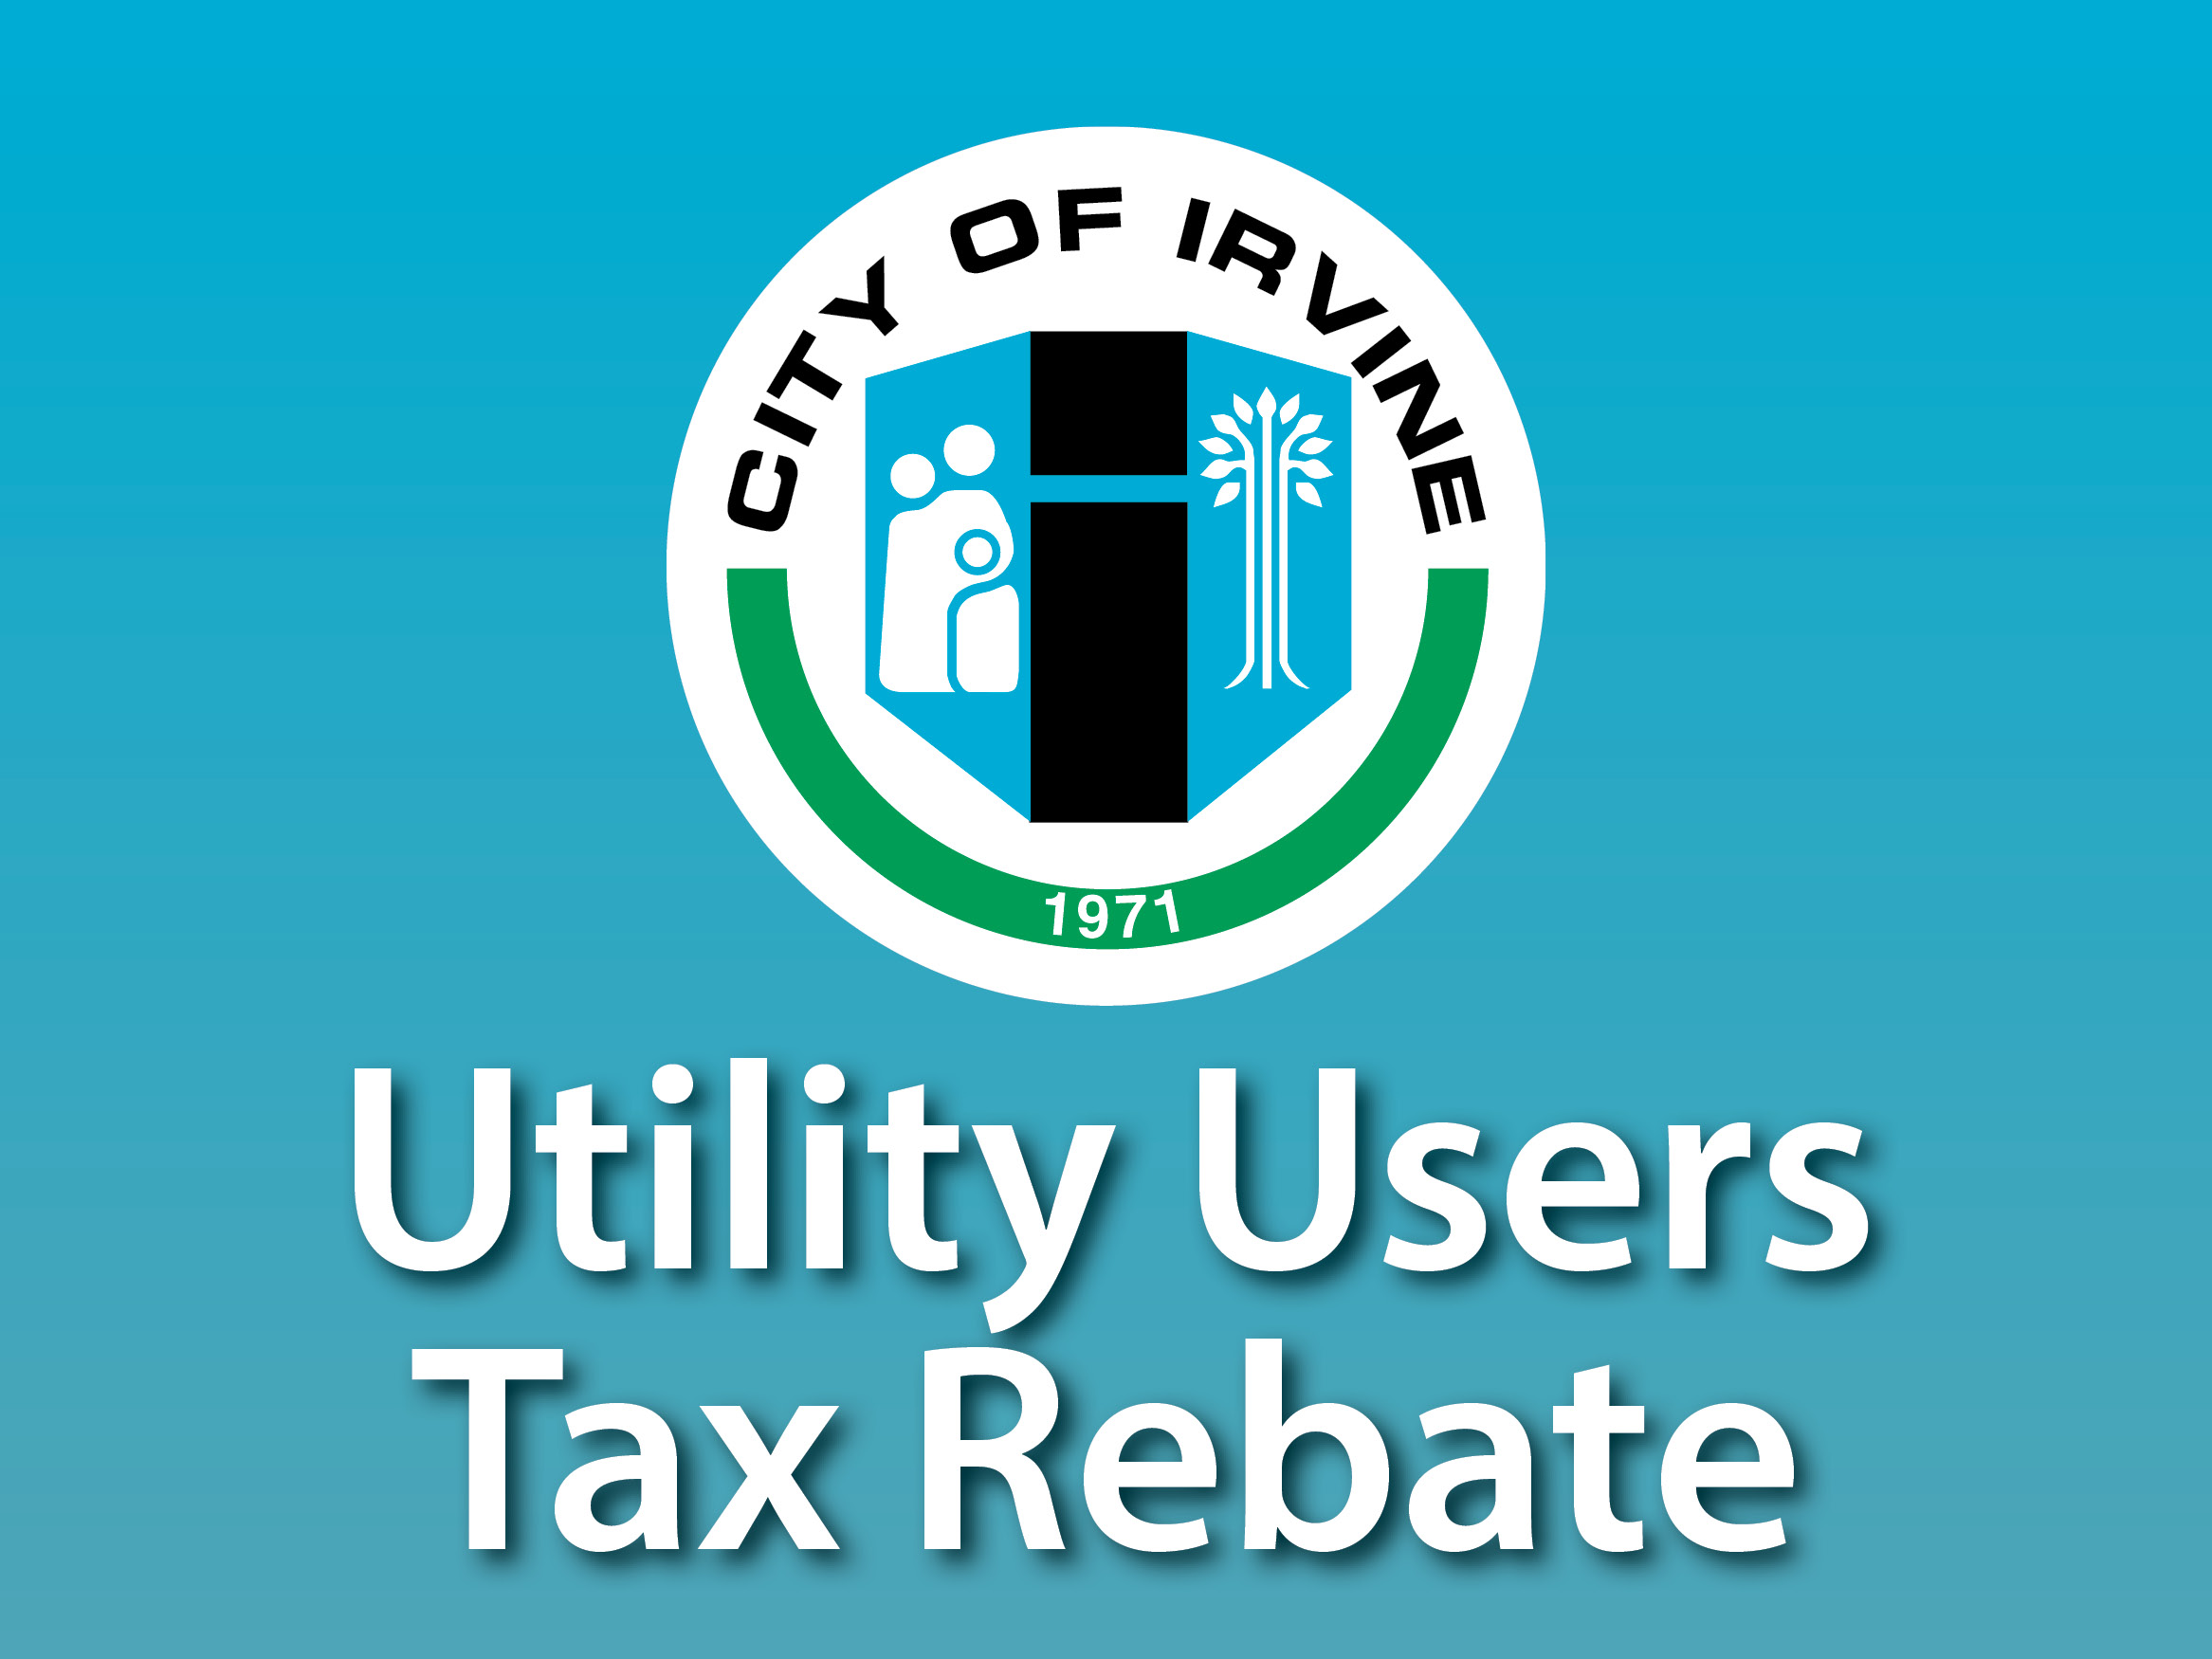 Utility Users Tax Rebate City Of Irvine